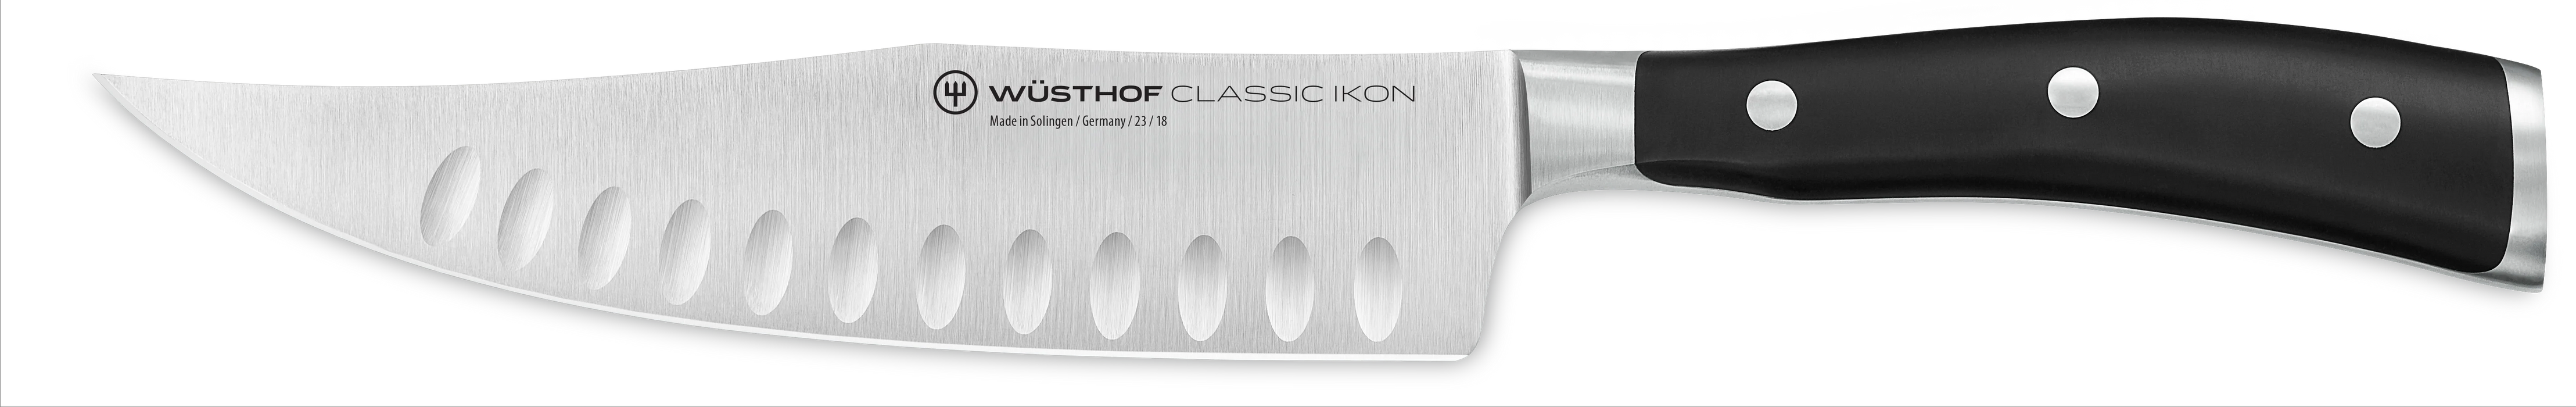 Wusthof Classic Ikon Craftsman 7" Hollow Edge